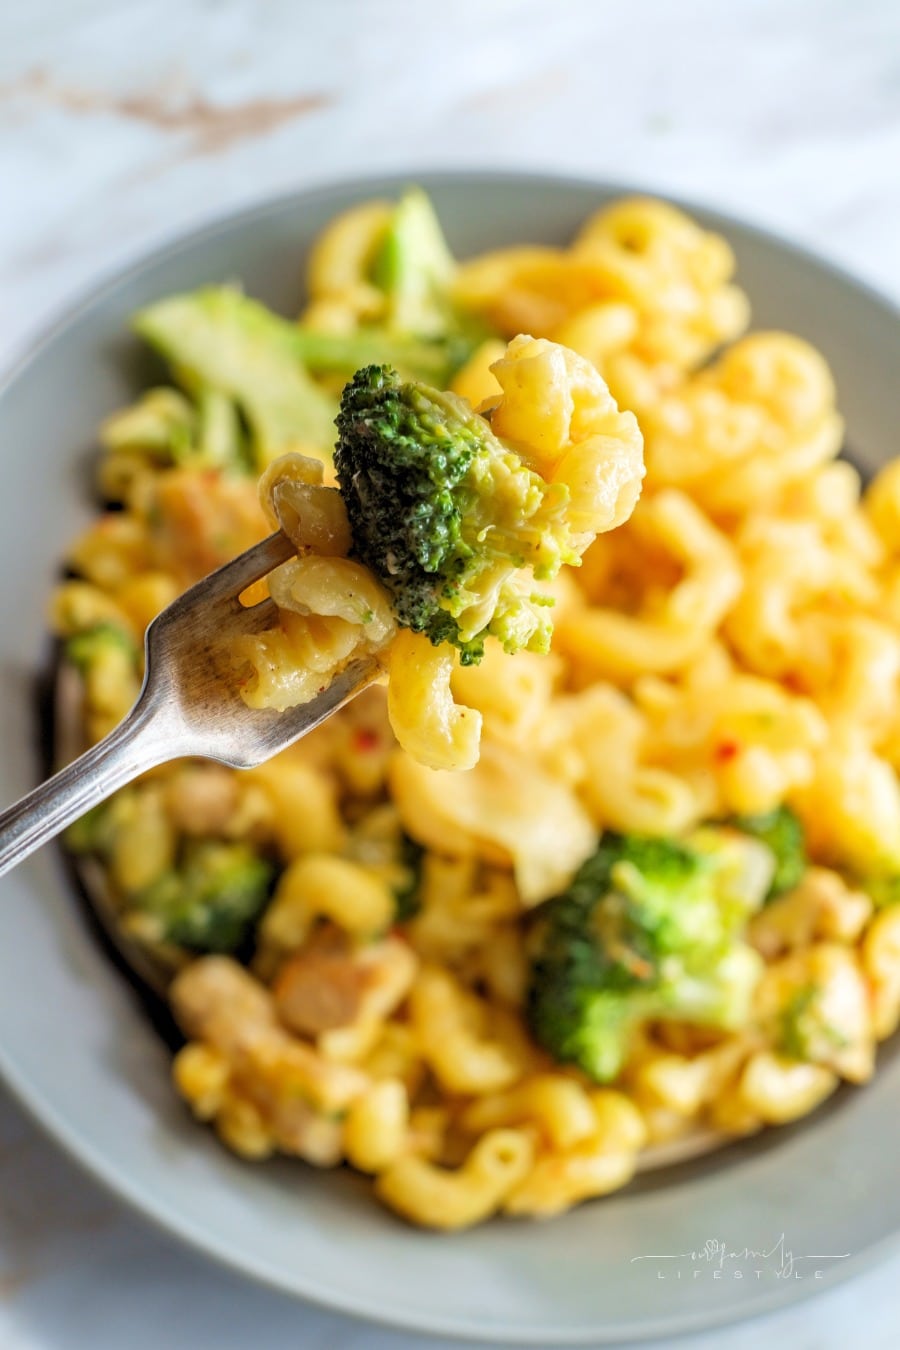 Delicious Velveeta Mac and Cheese with Broccoli